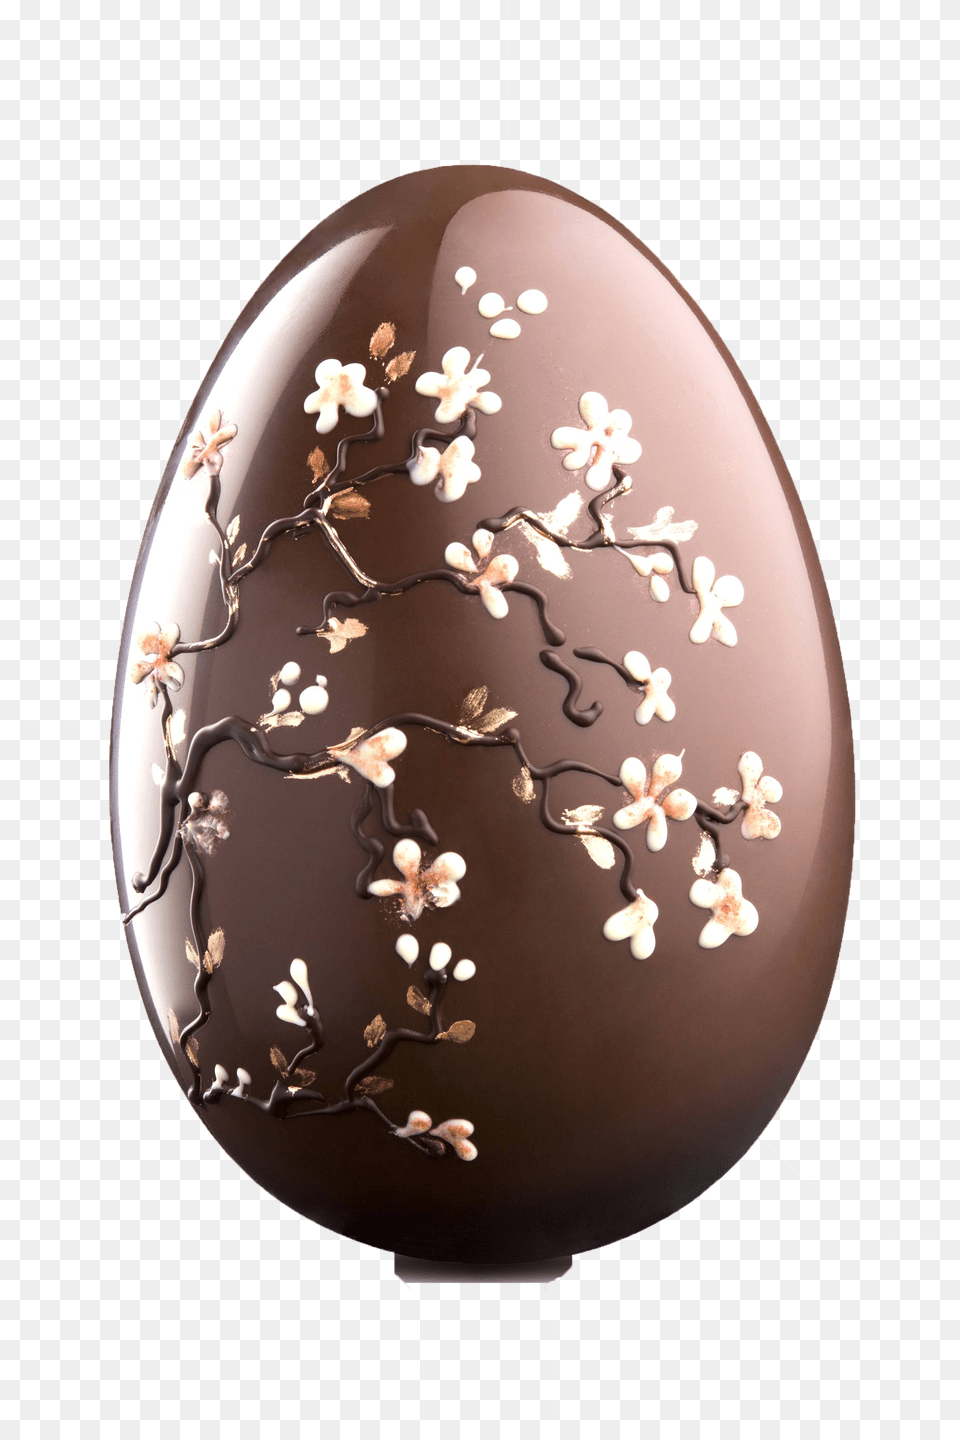 Chocolate Egg Transparent, Food, Easter Egg Free Png